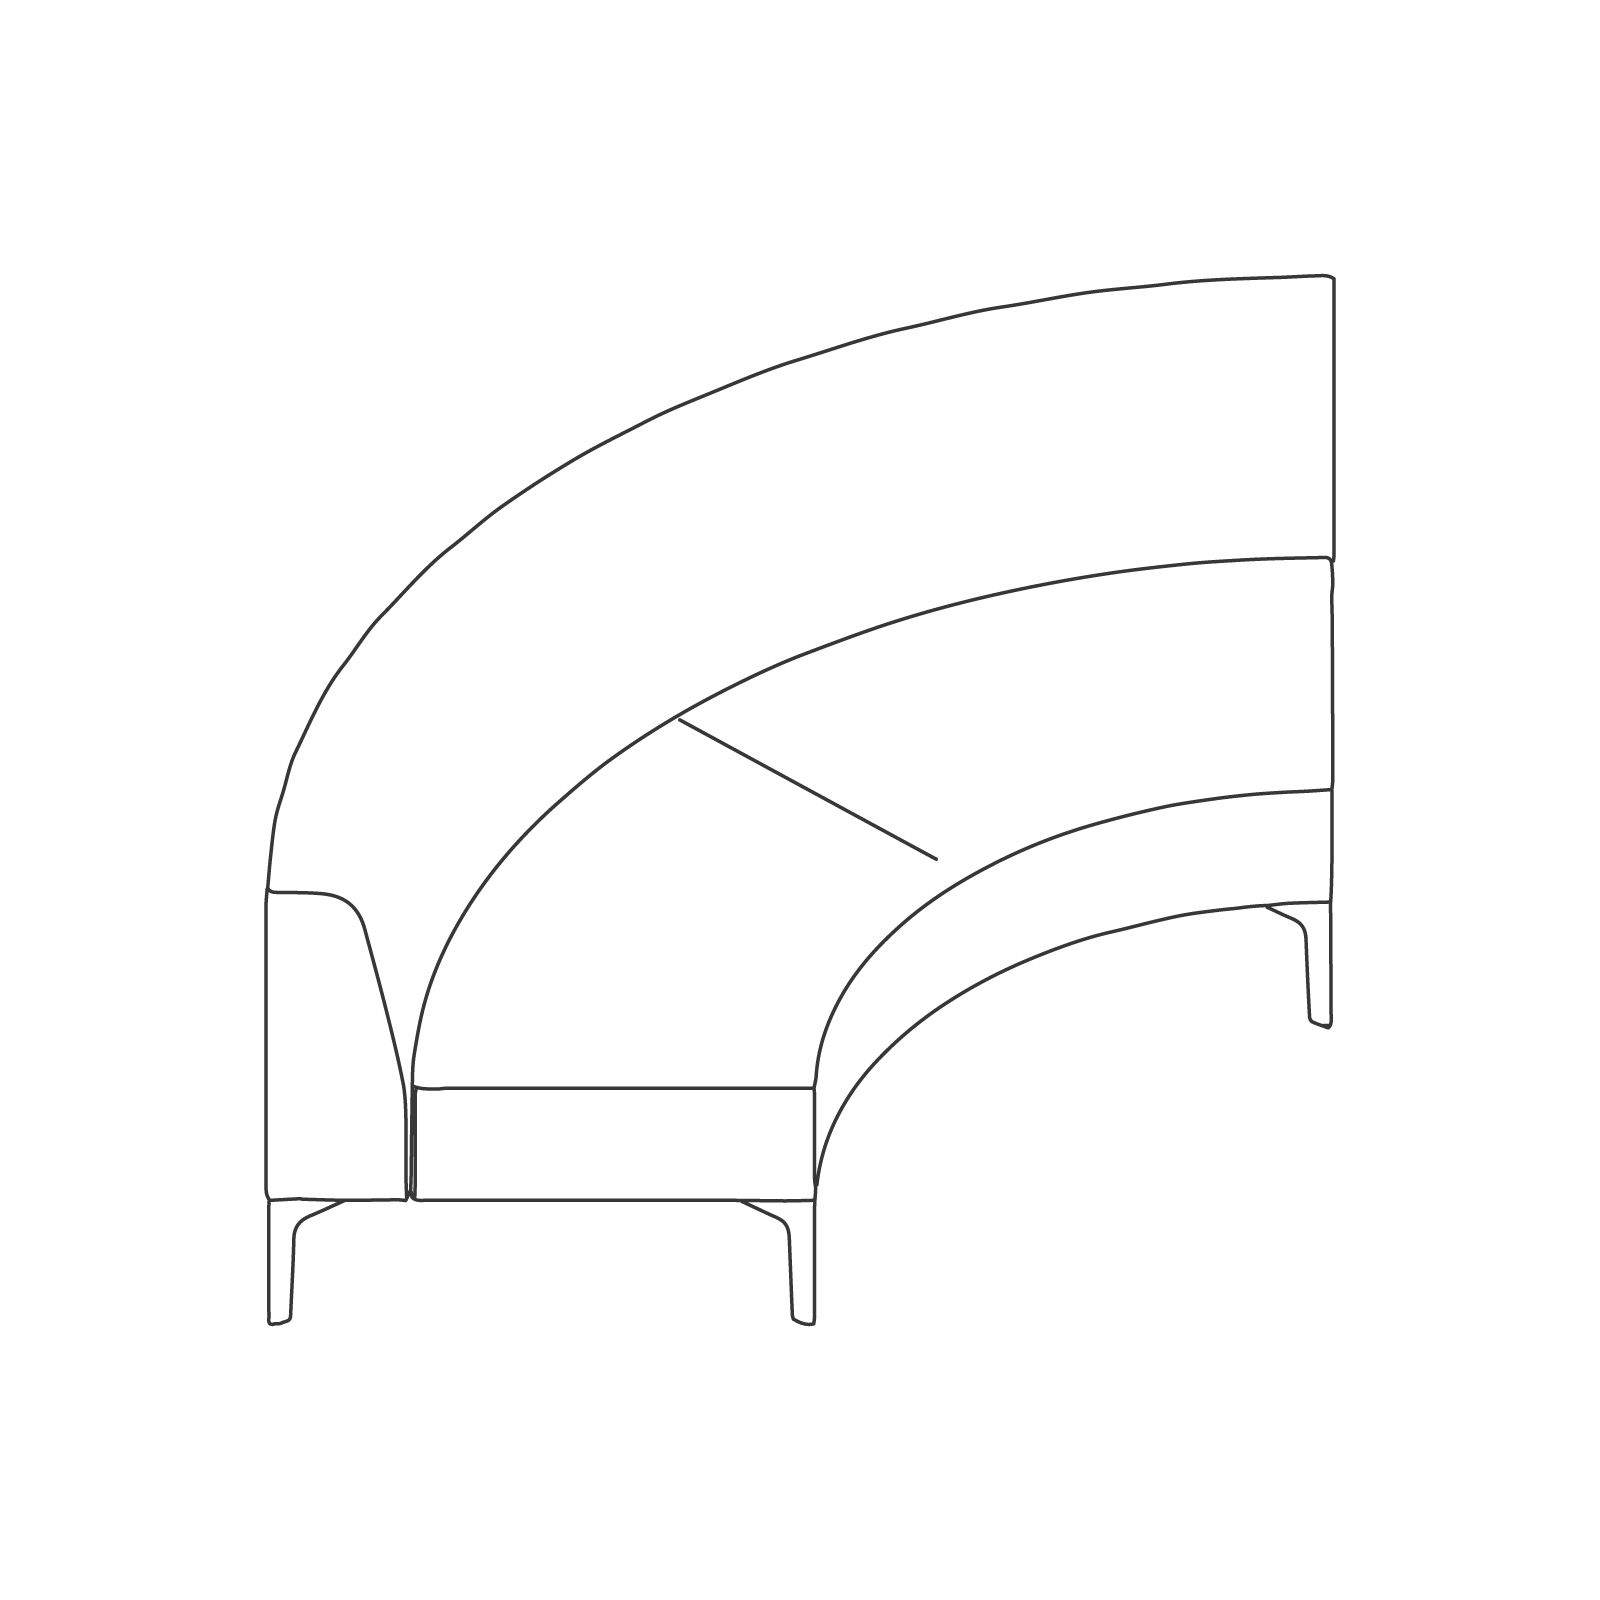 A line drawing - Symbol Modular Seating–90-Degree Curve